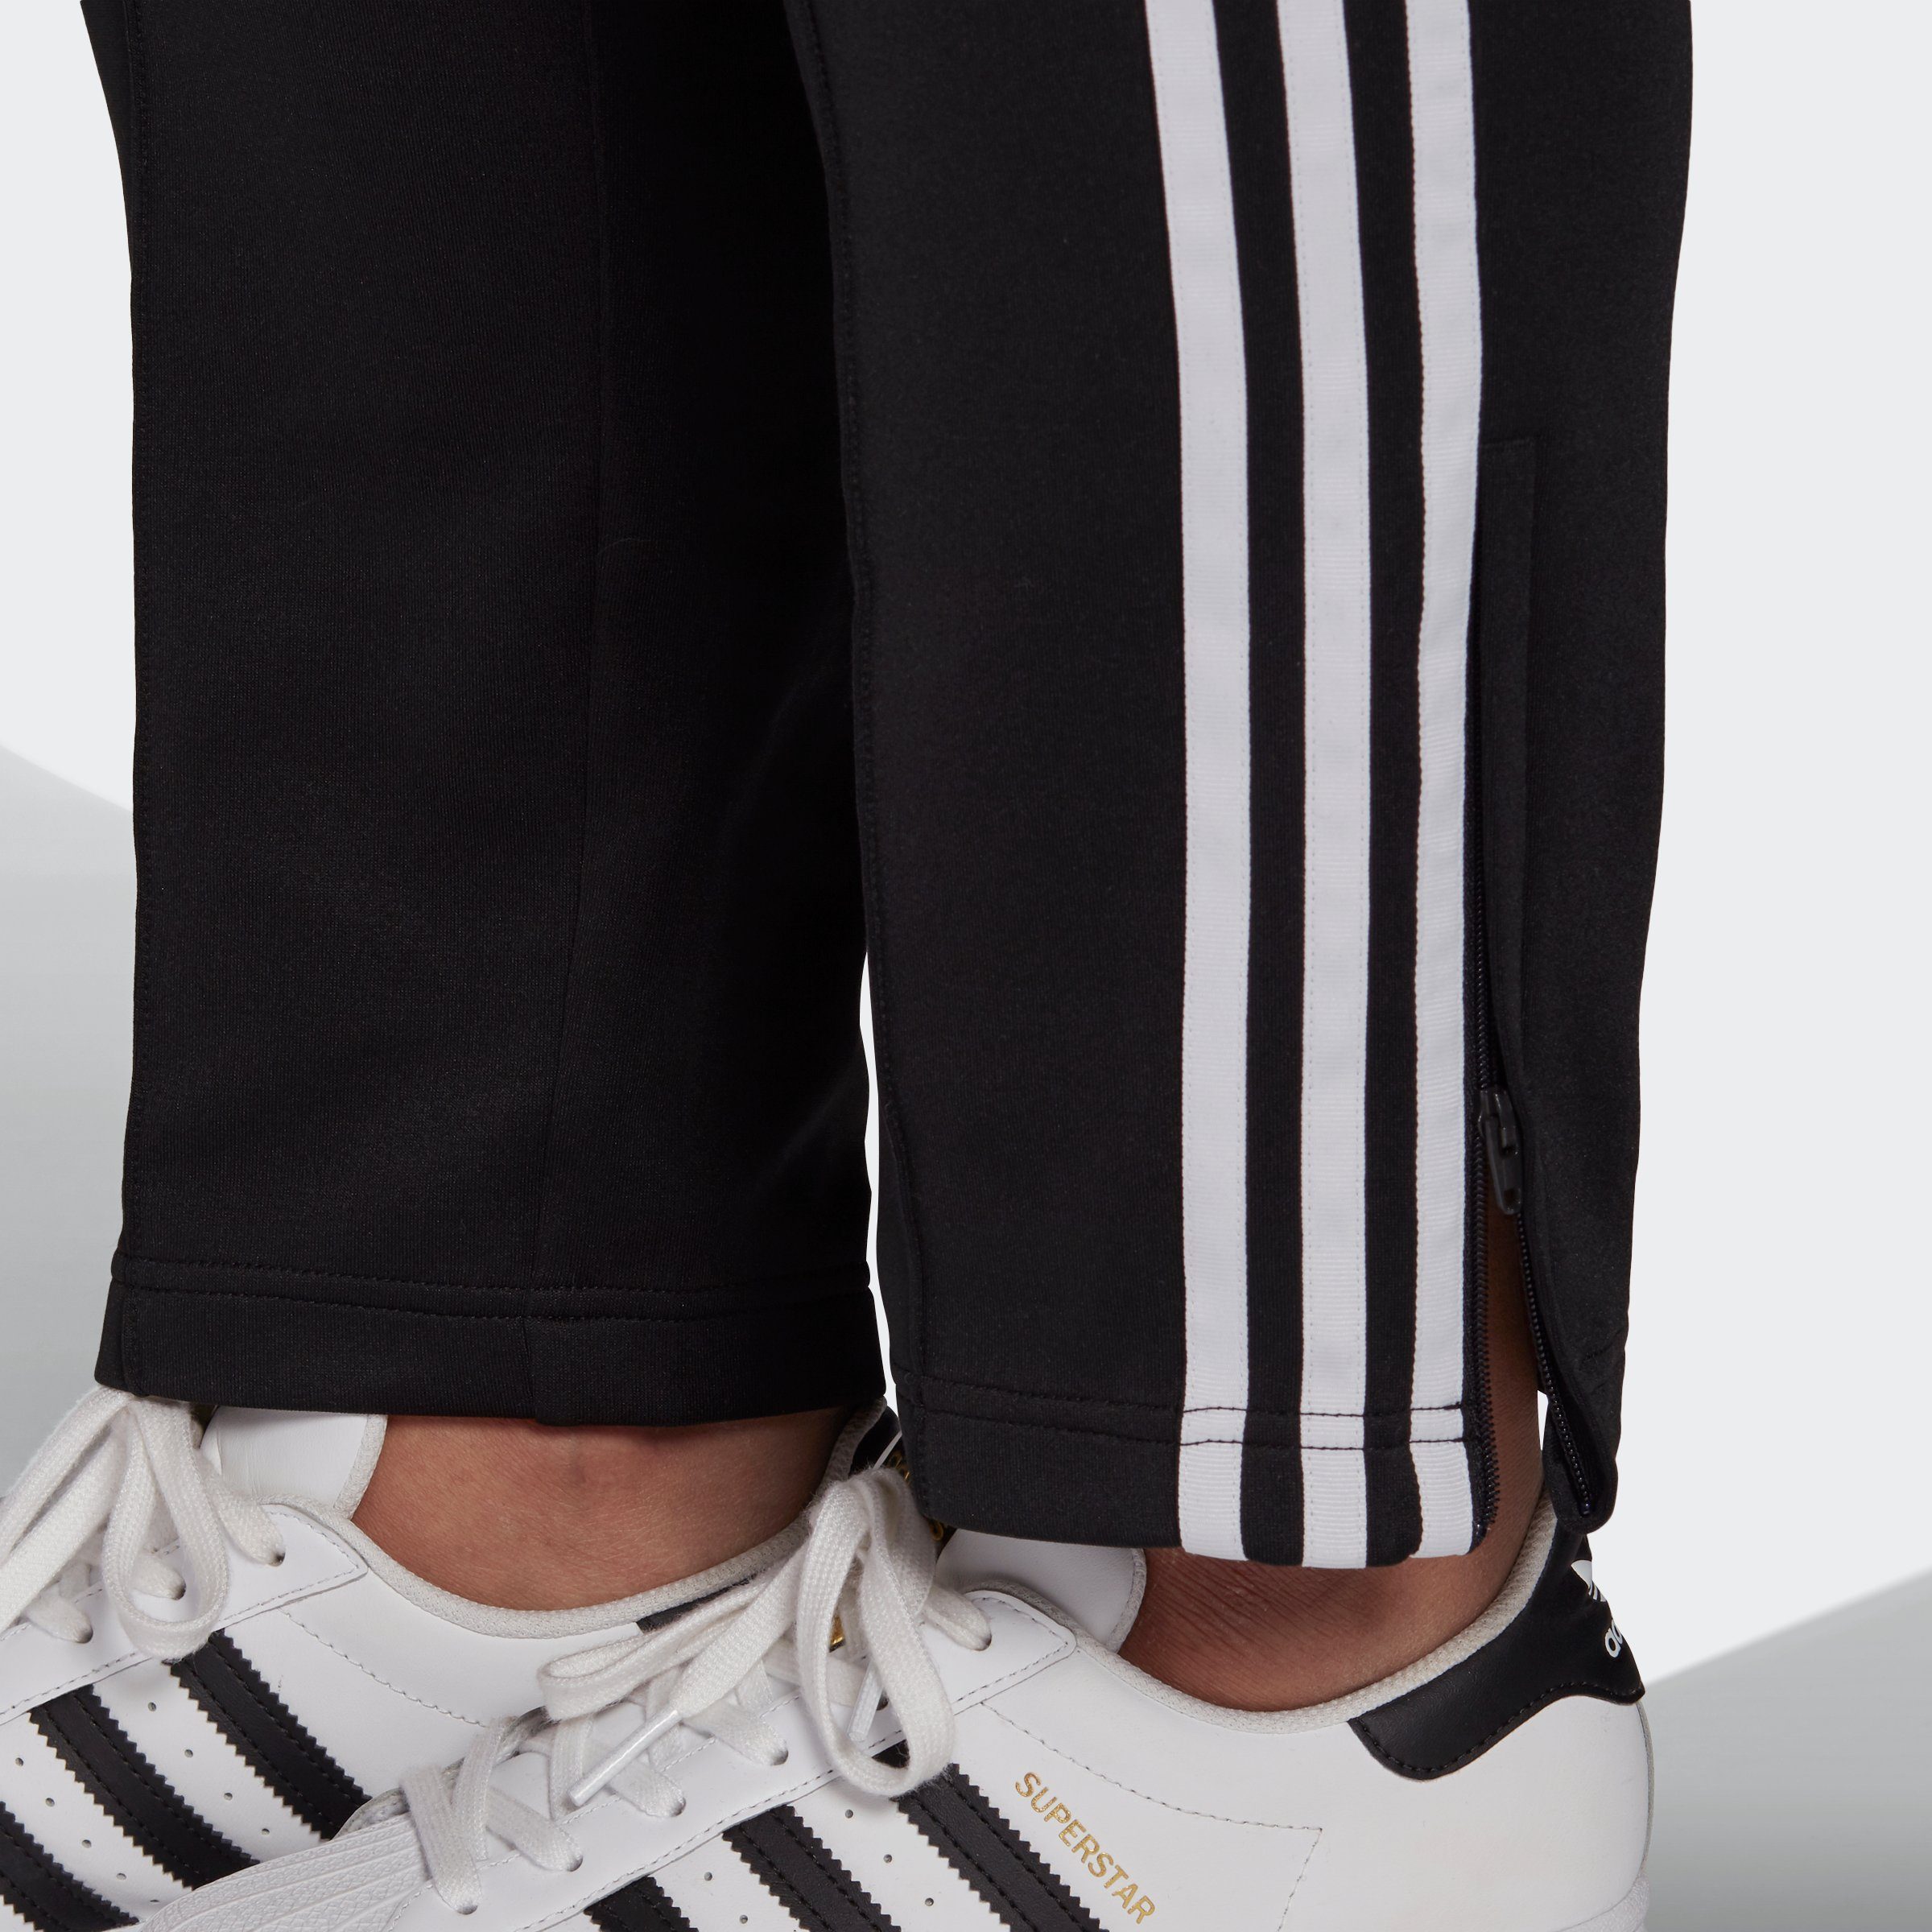 SST adidas BLACK/WHITE Originals (1-tlg) Trainingshose PANTS PB